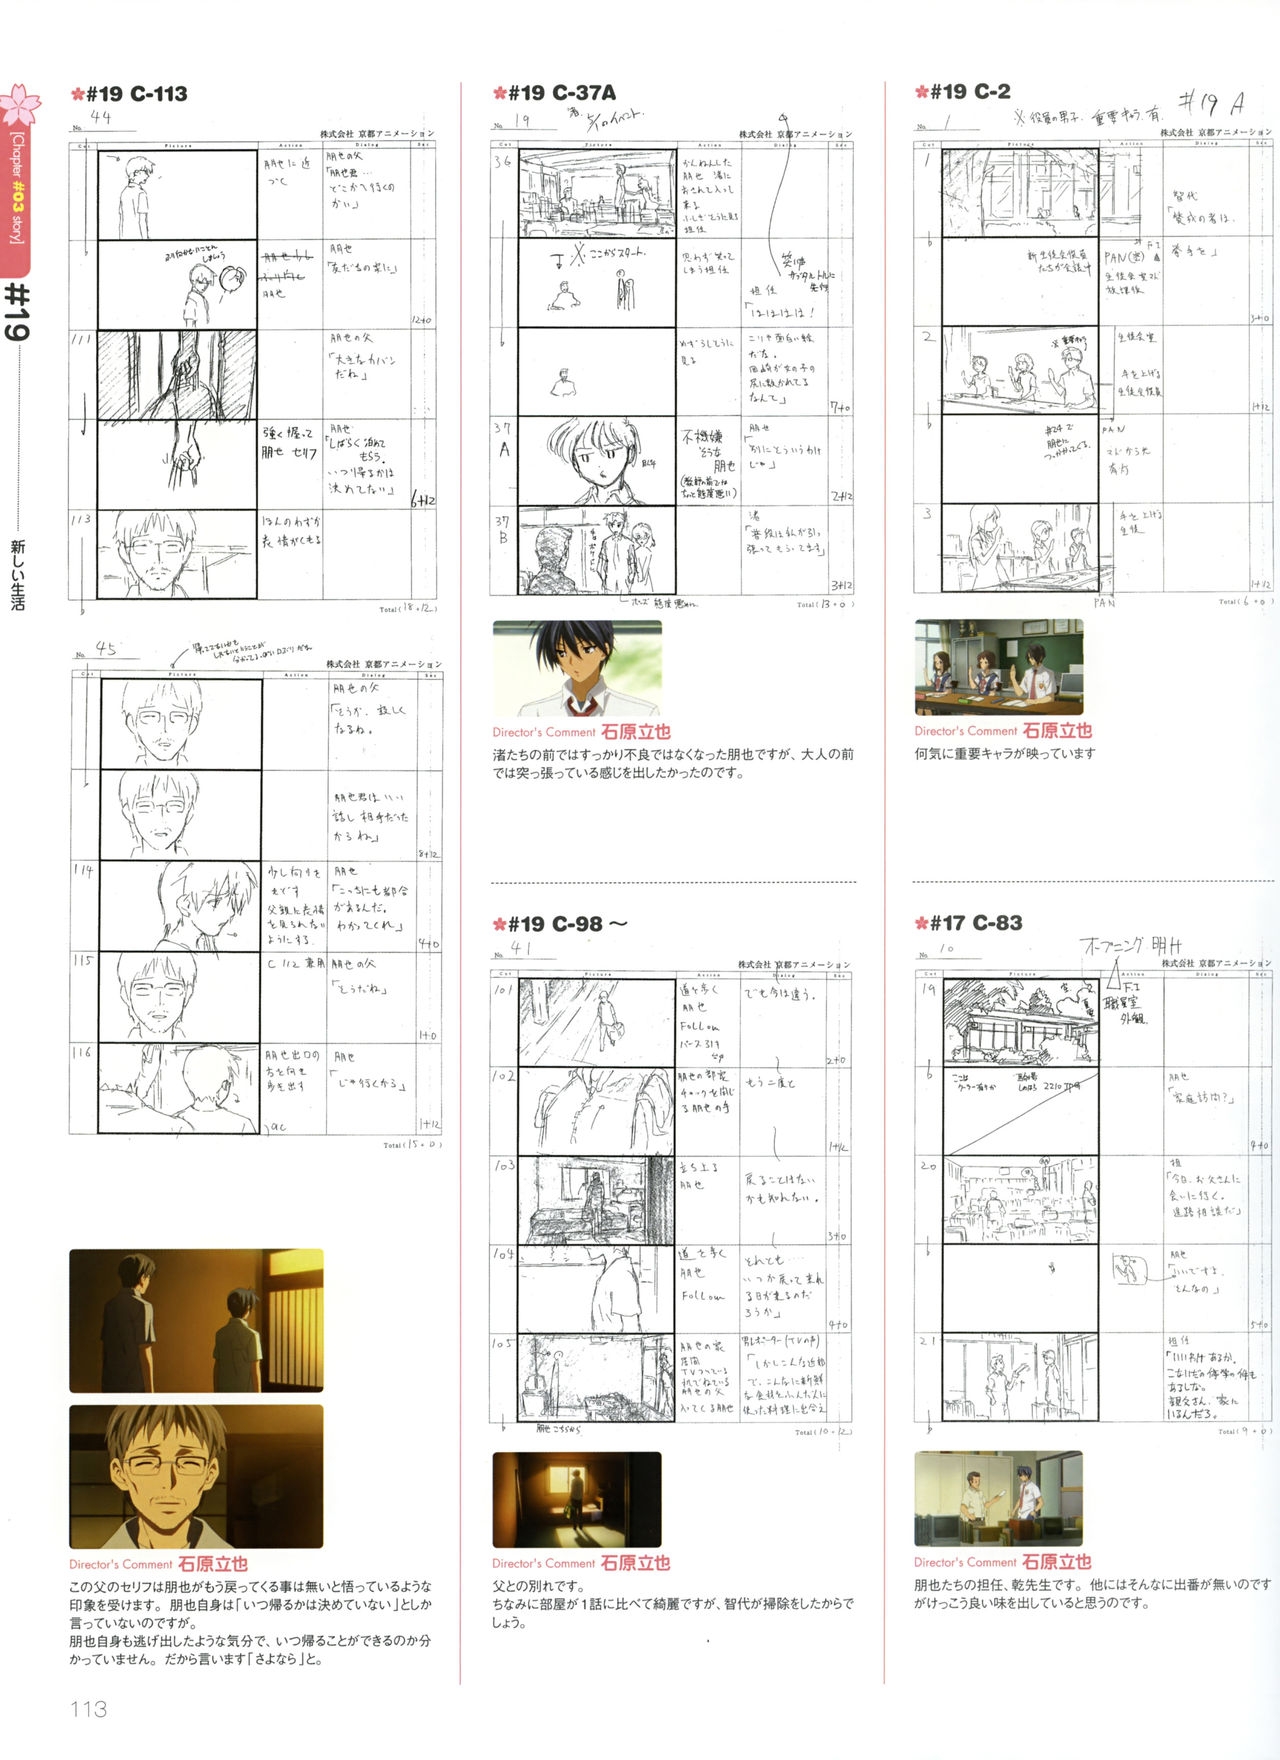 Clannad TV Animation Visual Fan Book 116